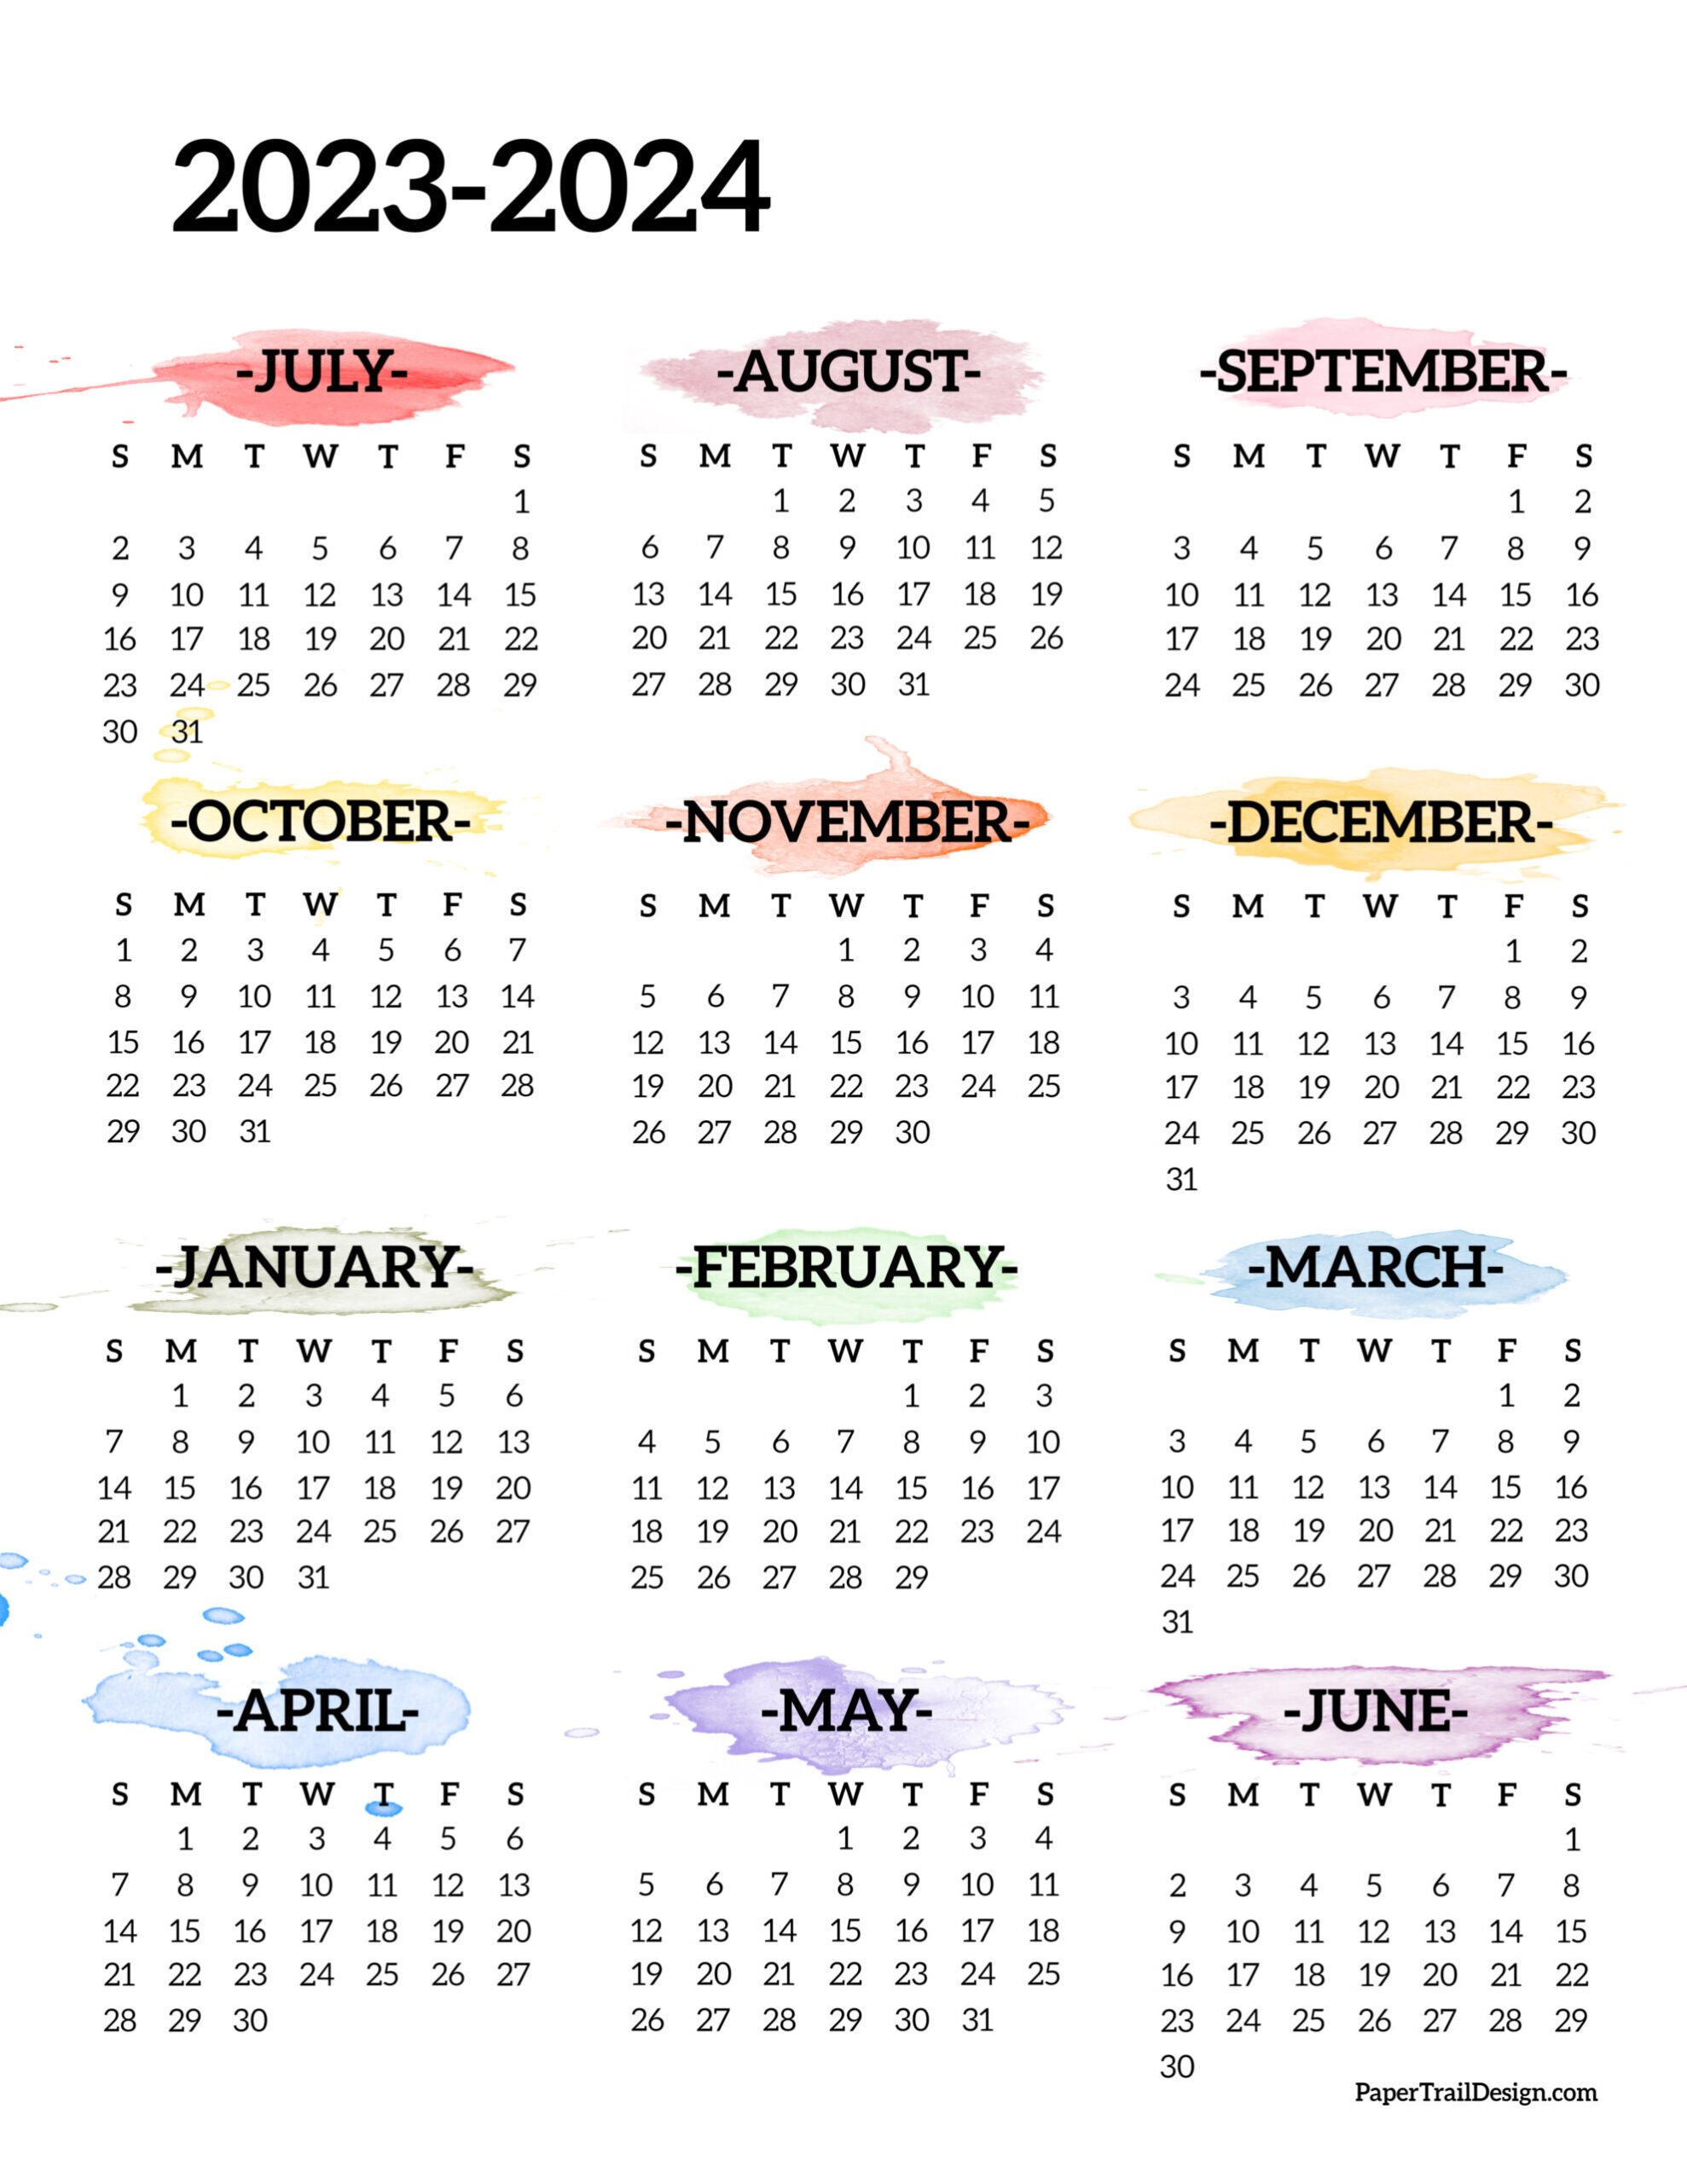 2023-2024 School Year Calendar Free Printable - Paper Trail Design for Printable Calendar July 2023-June 2024